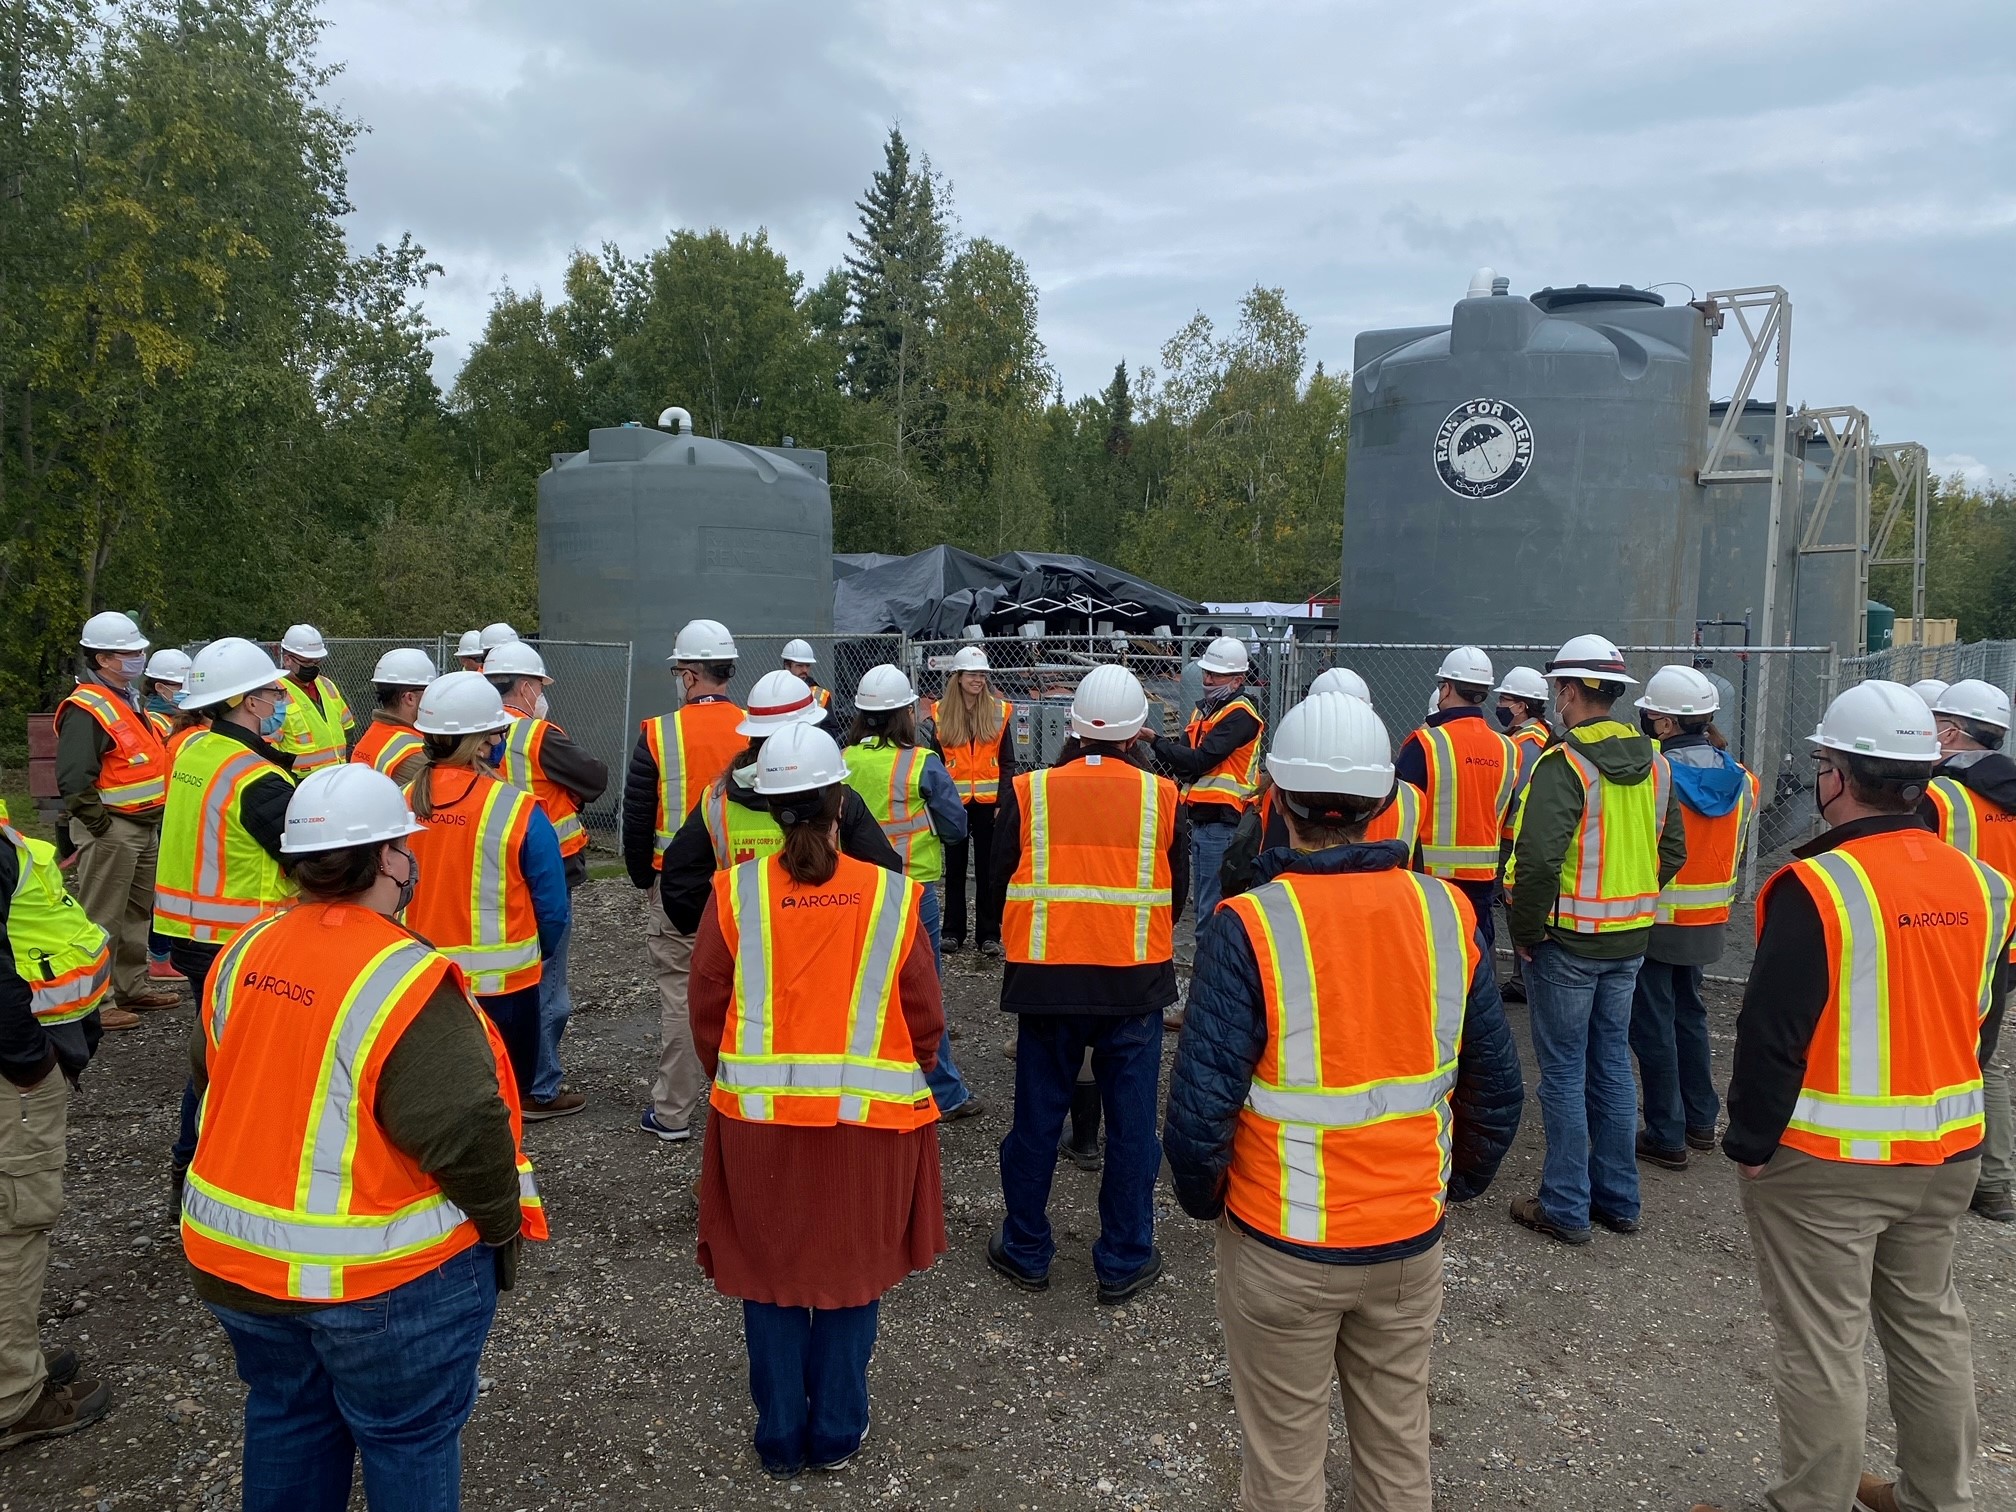 PFAS remediation in soil site tour demo day in Alaska